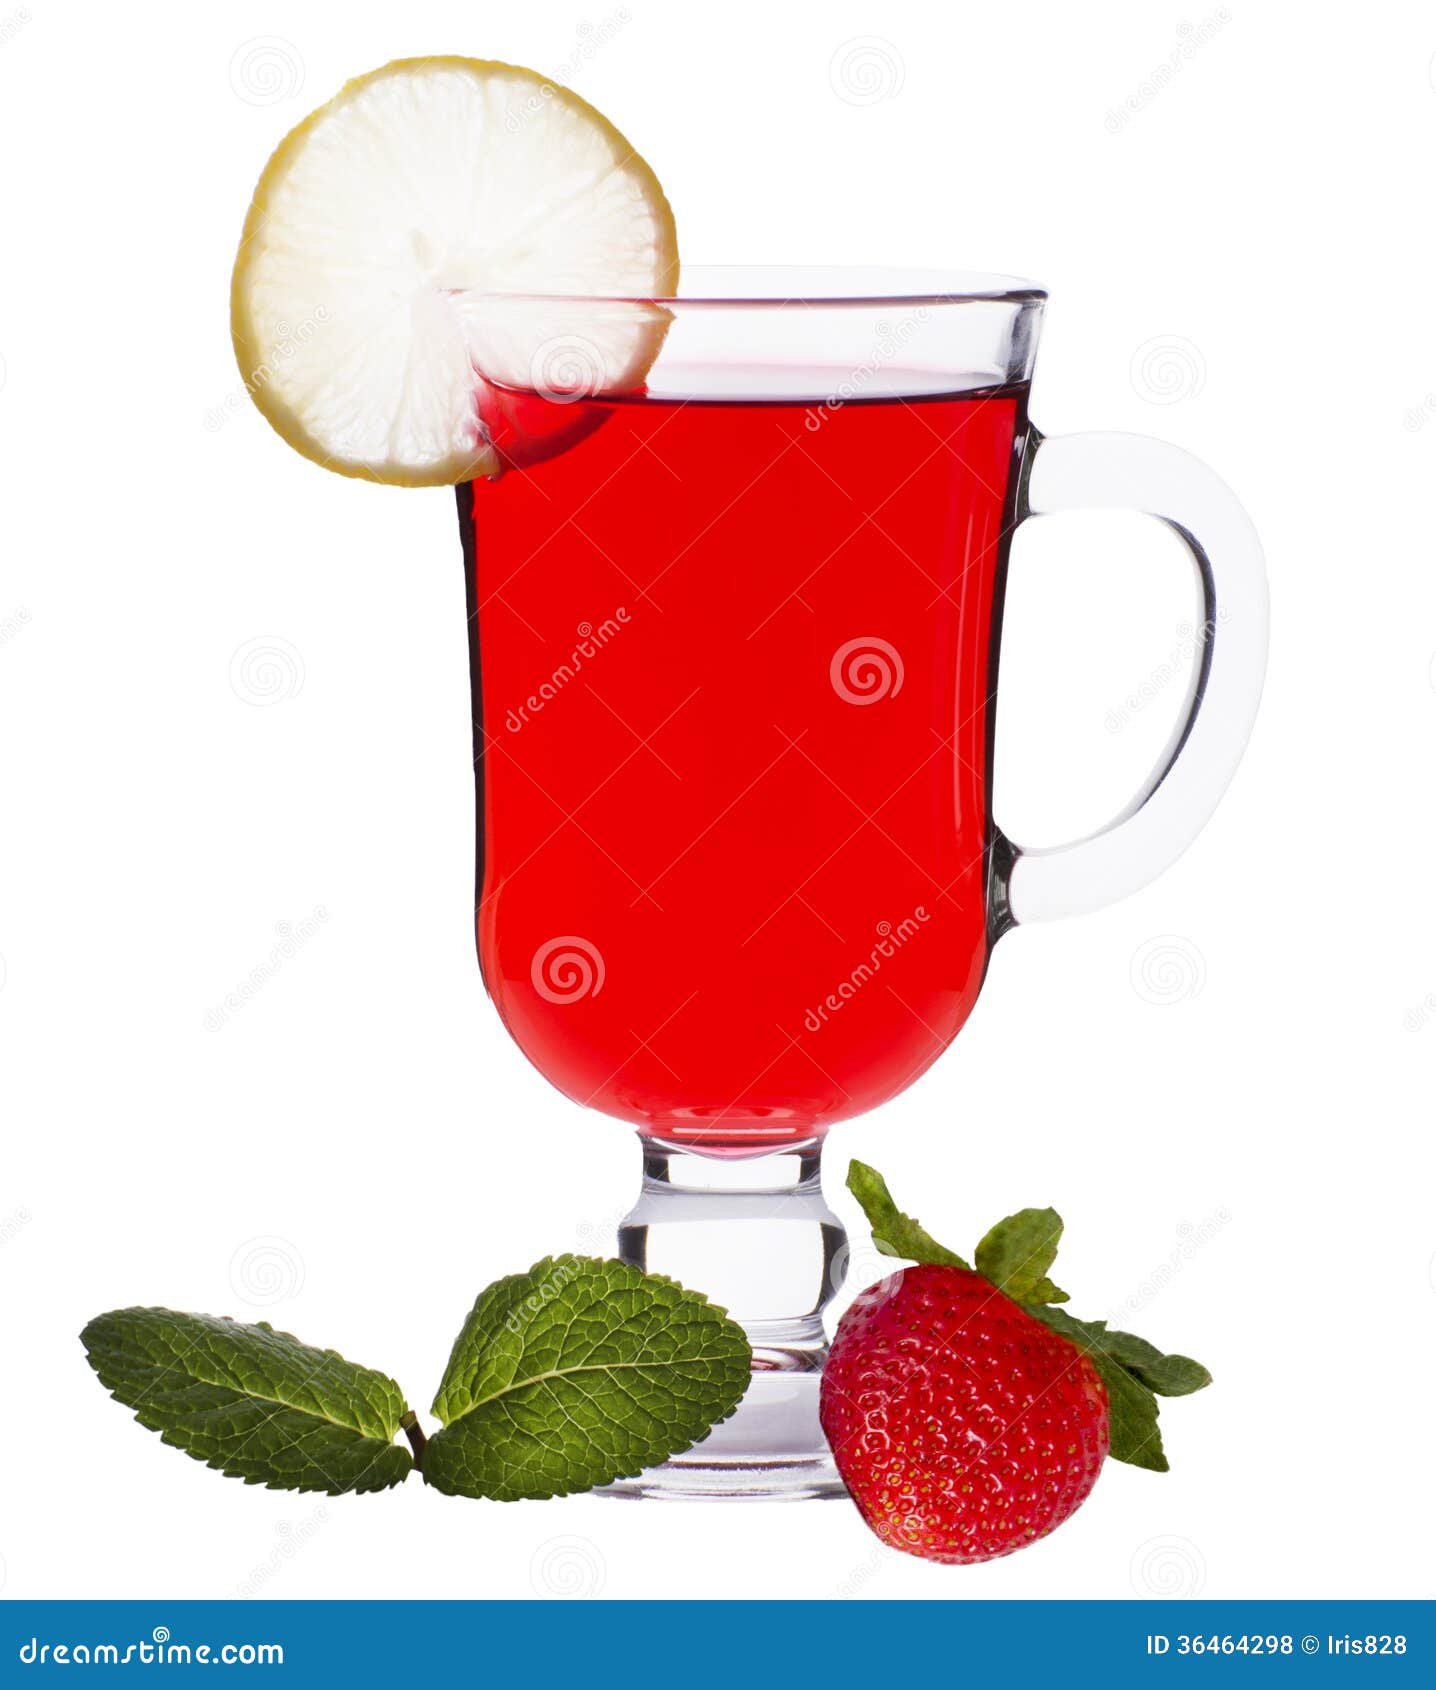 strawberry tea clipart - photo #18